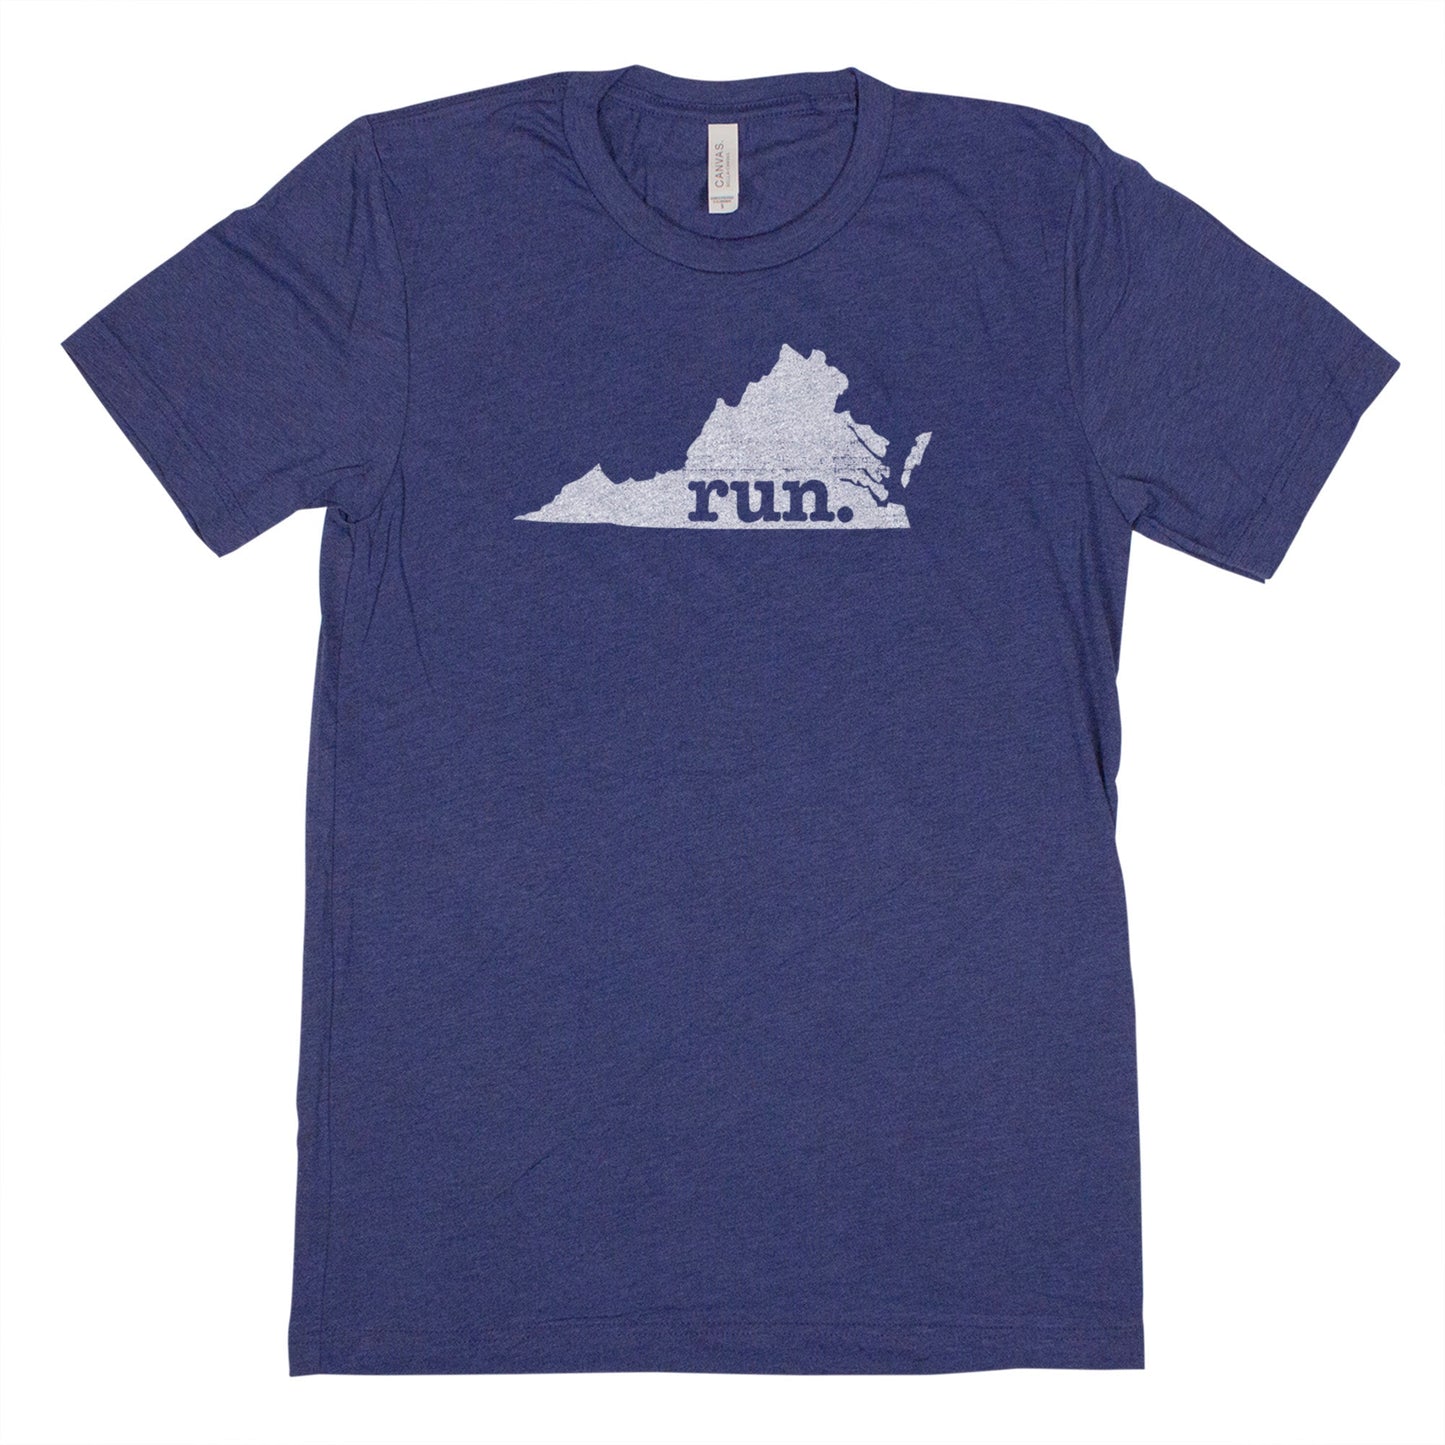 run. Men's Unisex T-Shirt - Virginia